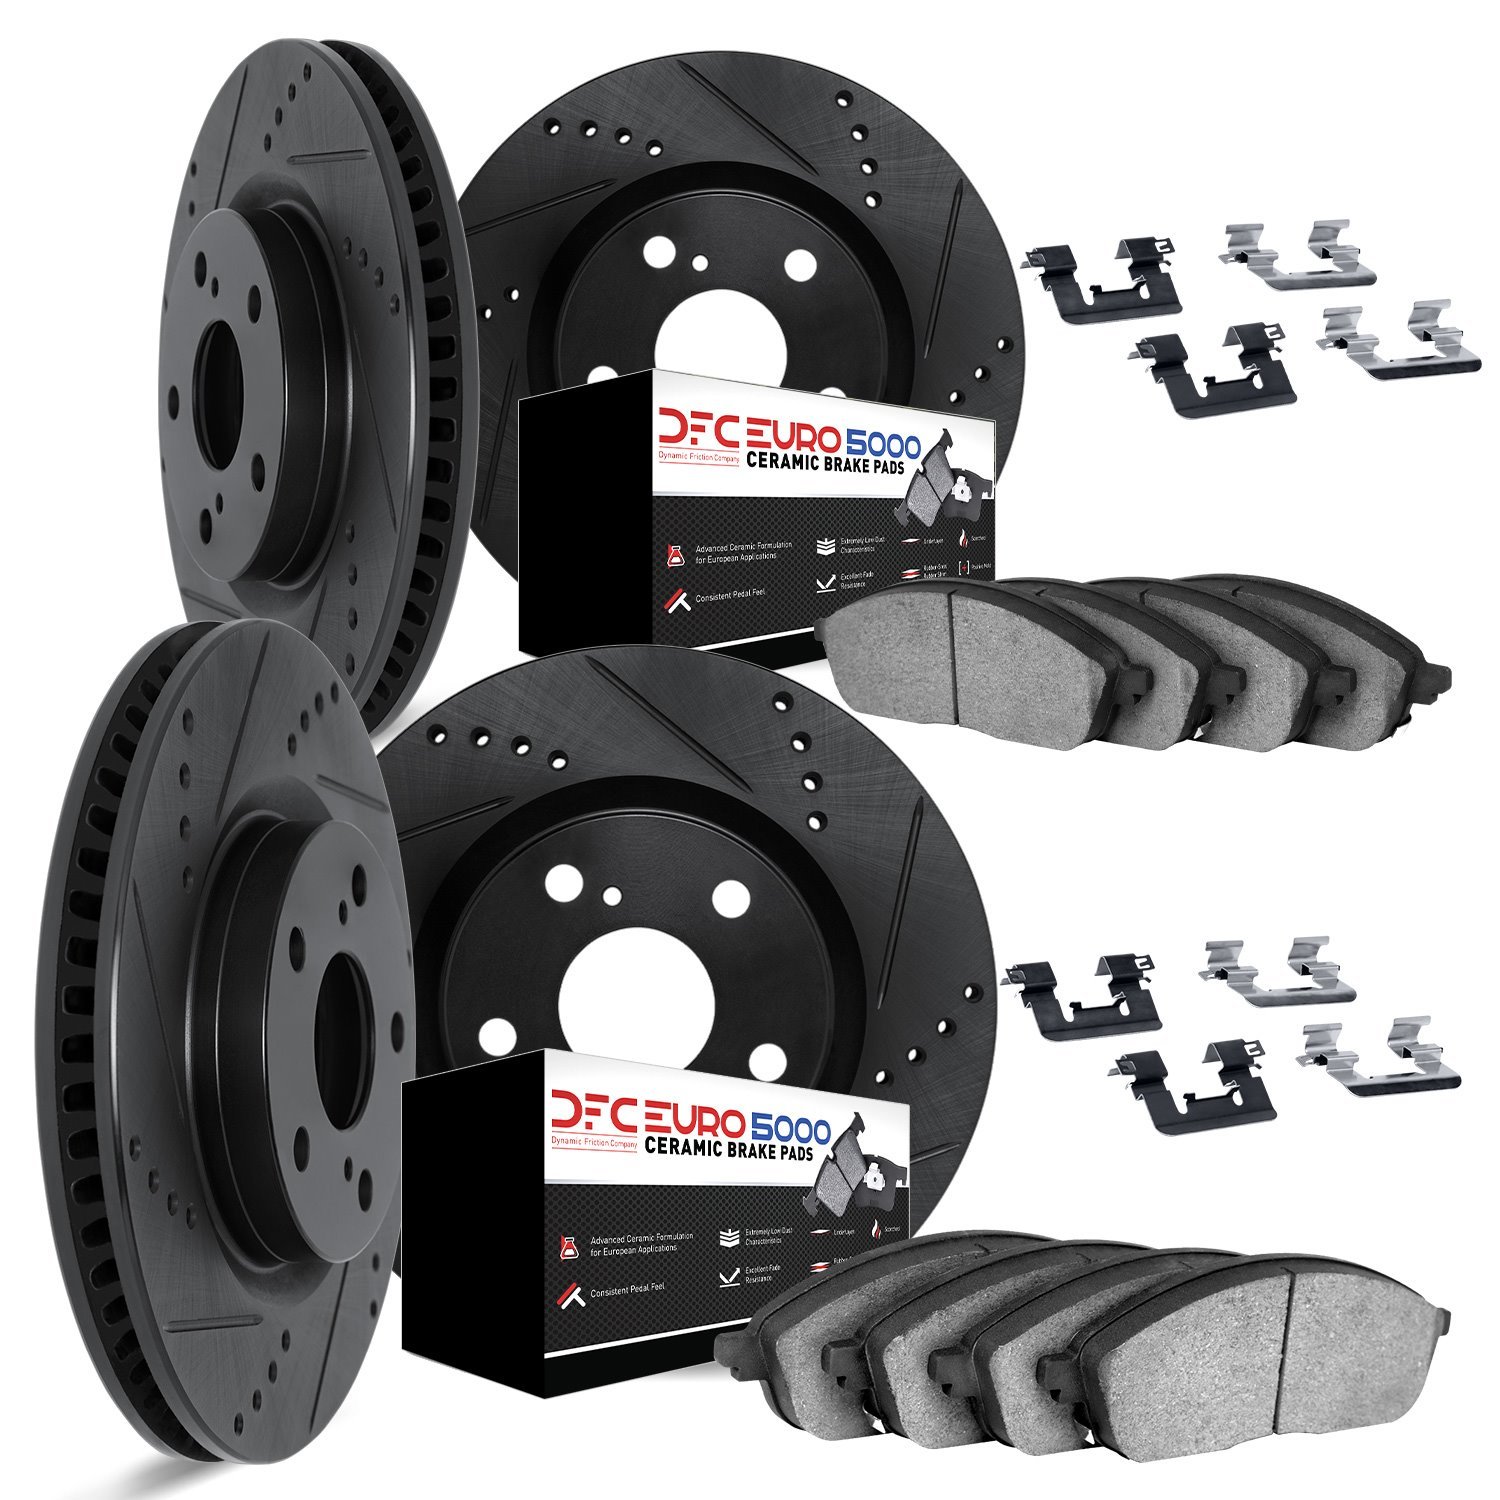 8614-31036 Drilled/Slotted Brake Rotors w/5000 Euro Ceramic Brake Pads Kit & Hardware [Black], 2007-2018 BMW, Position: Front an